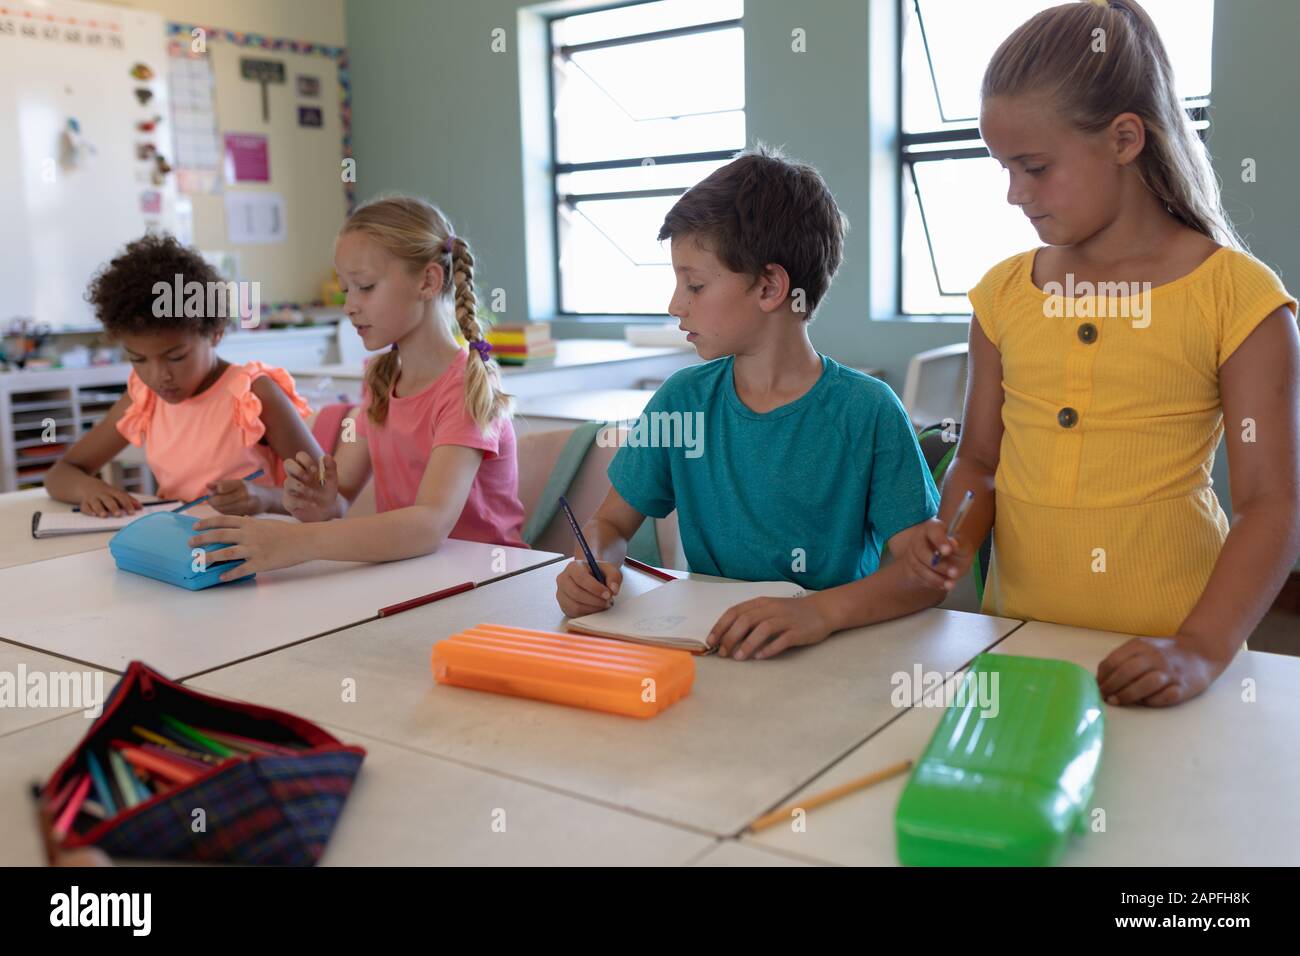 Group of schoolchildren working in an elementary school classroom Stock Photo